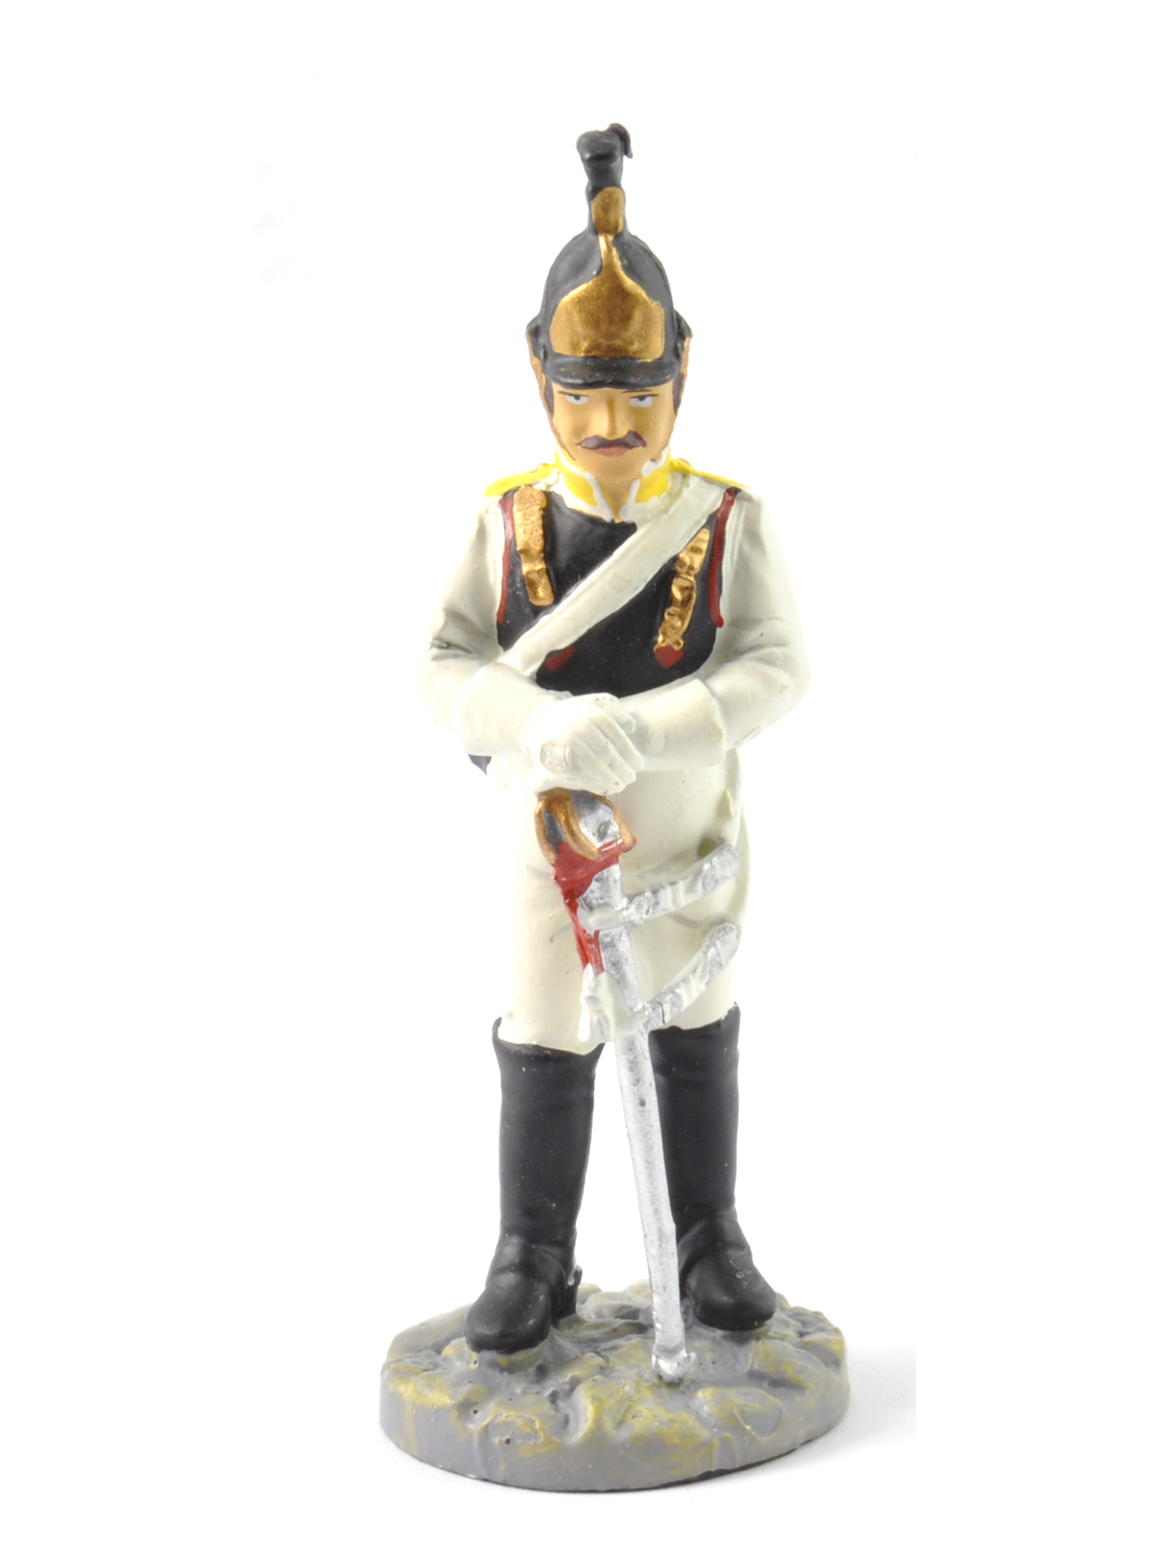 Private of Astrakhan Cuirassier regiment in dress uniform, 1812